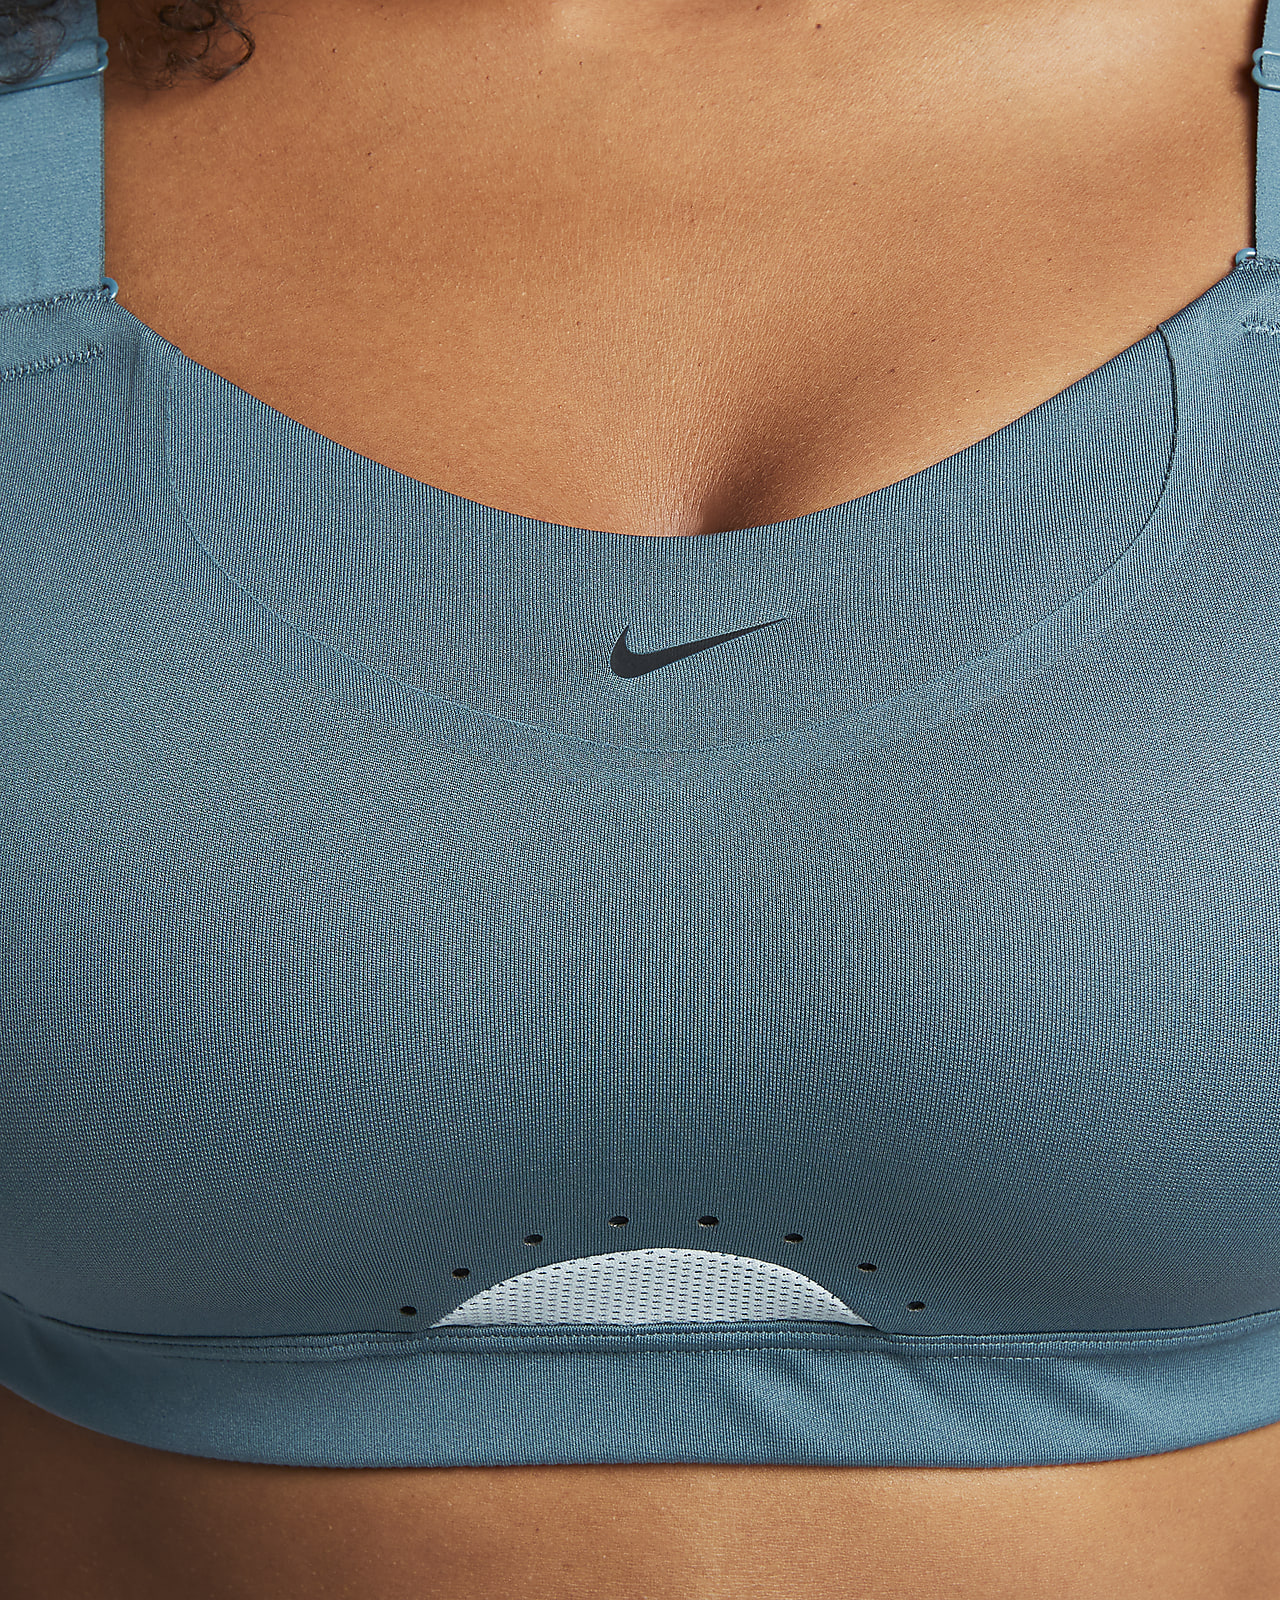 domein Resultaat dynamisch Nike Alpha Women's High-Support Padded Adjustable Sports Bra. Nike.com